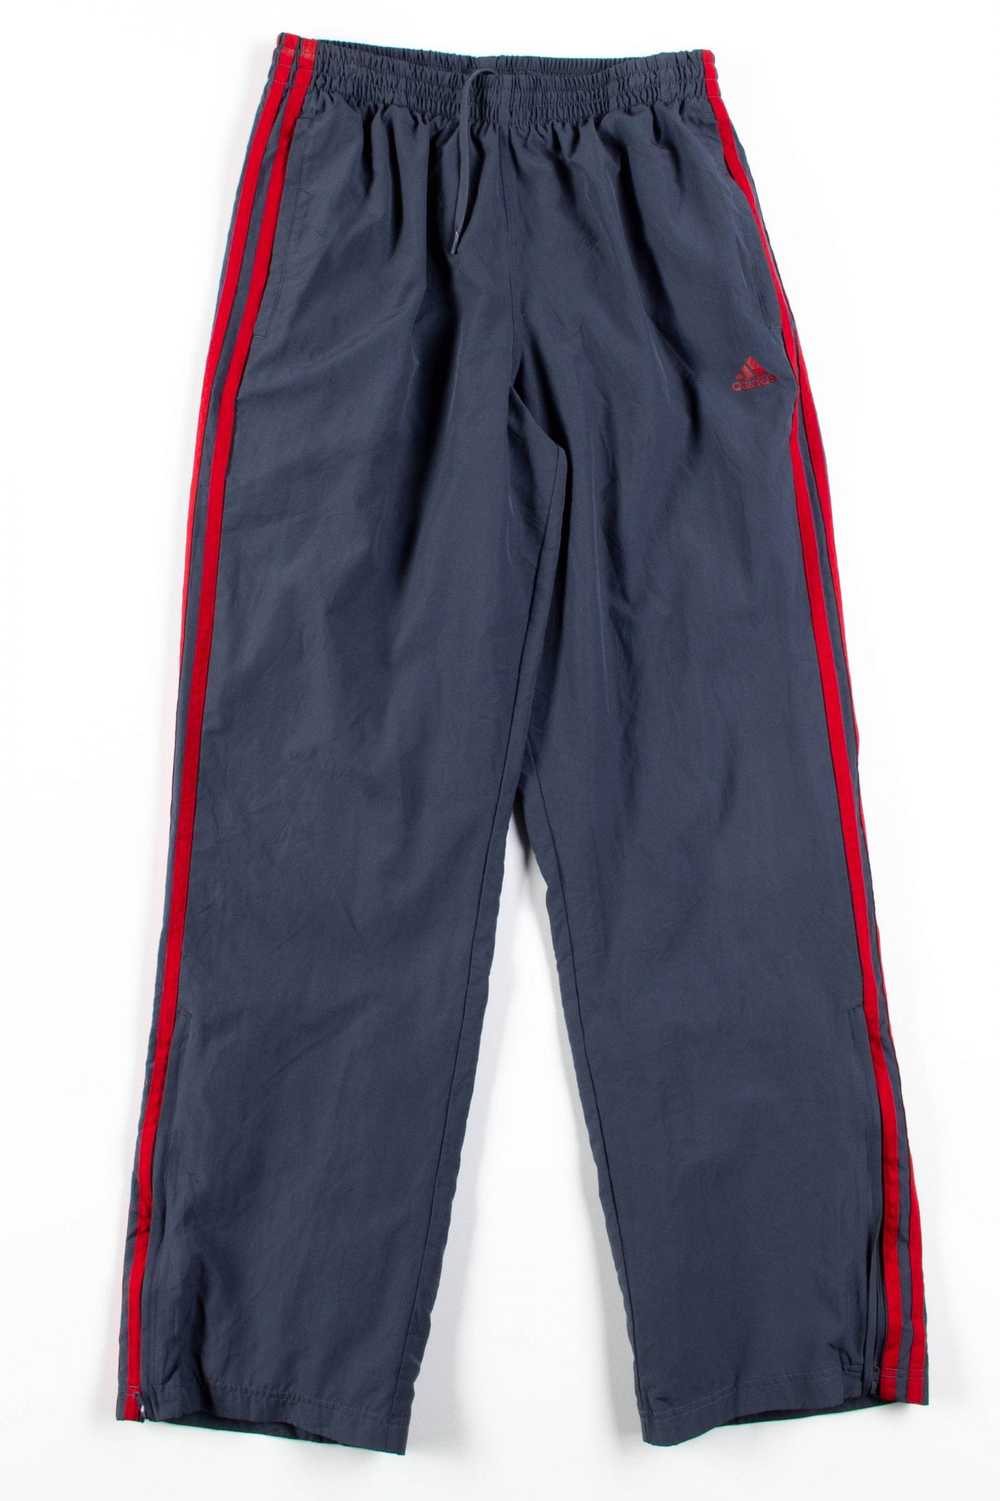 Grey & Red Adias Track Pants (sz. Youth XL) - image 1